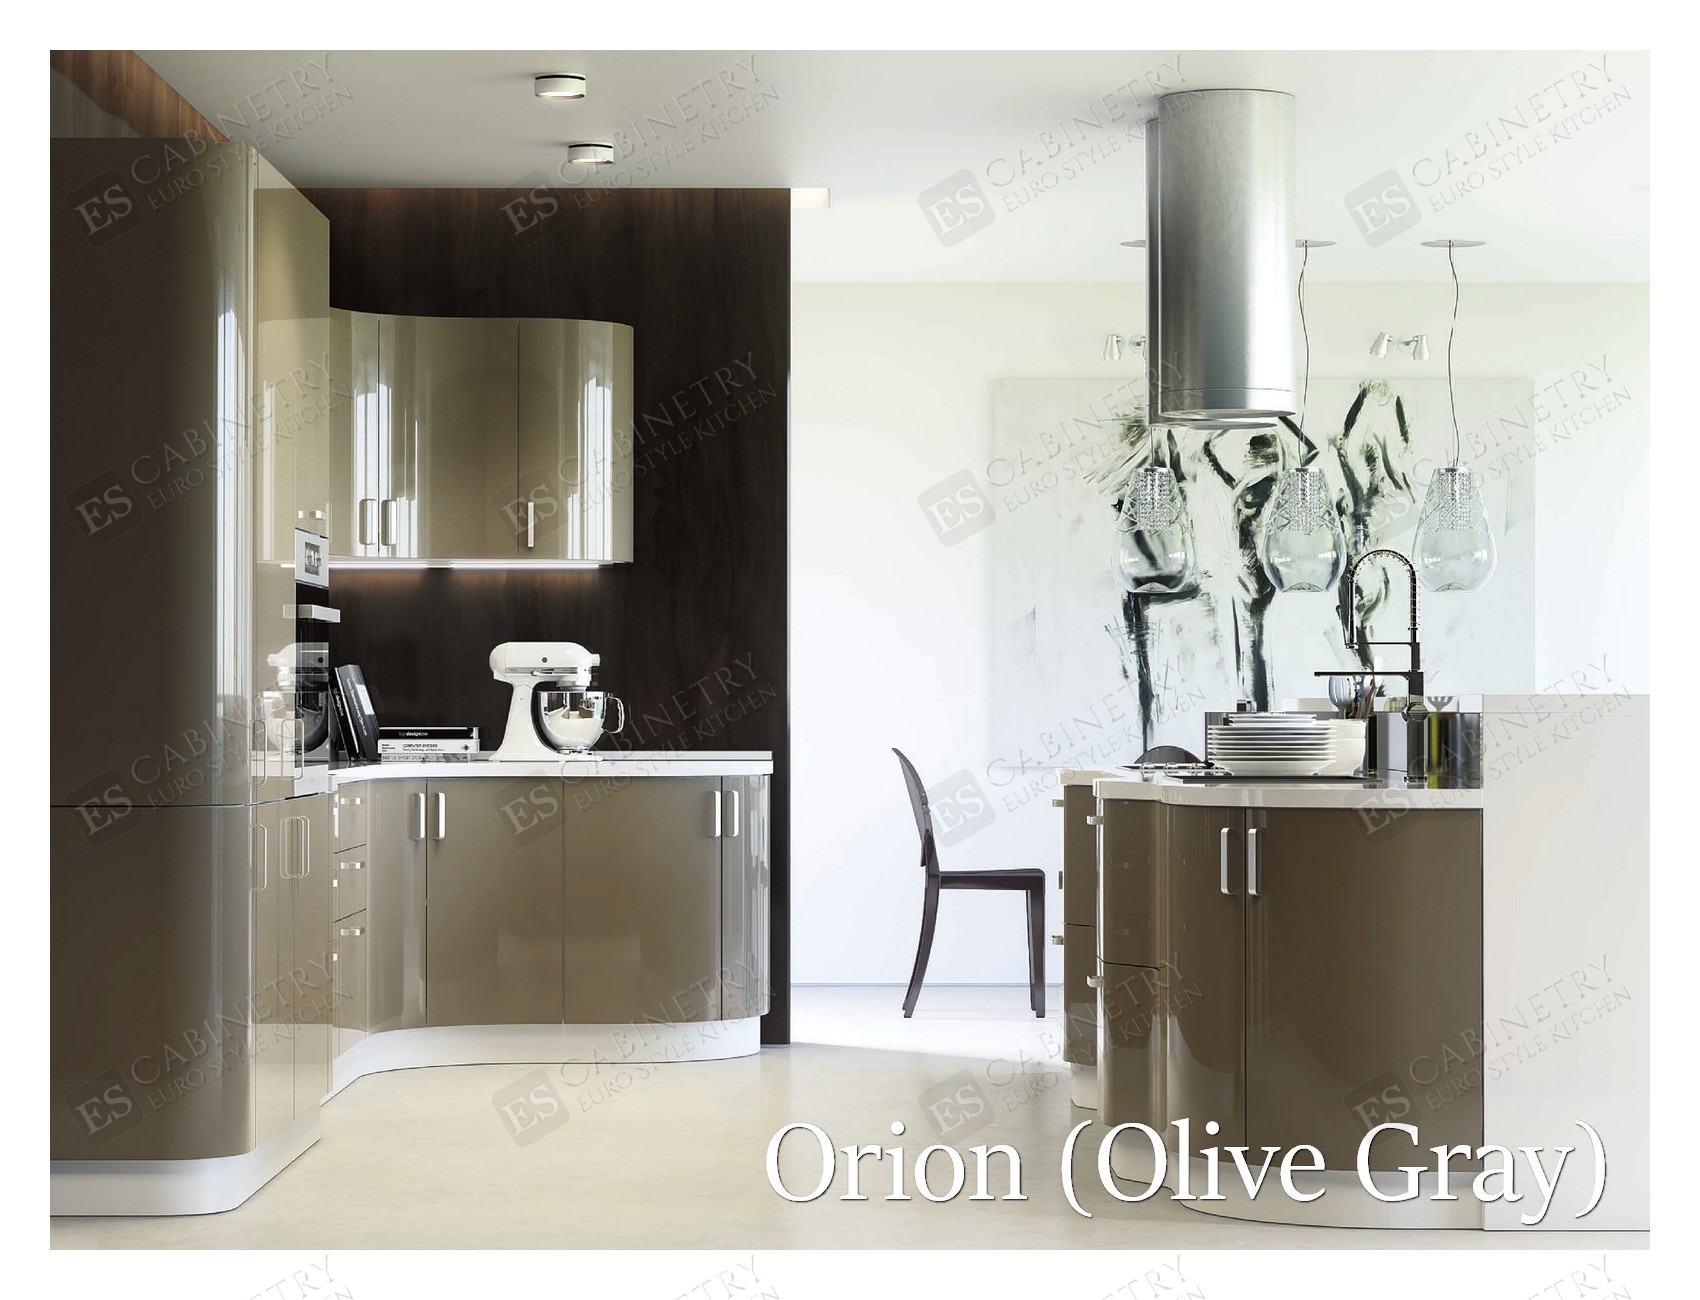 Orion Olive Gray | European design kitchens